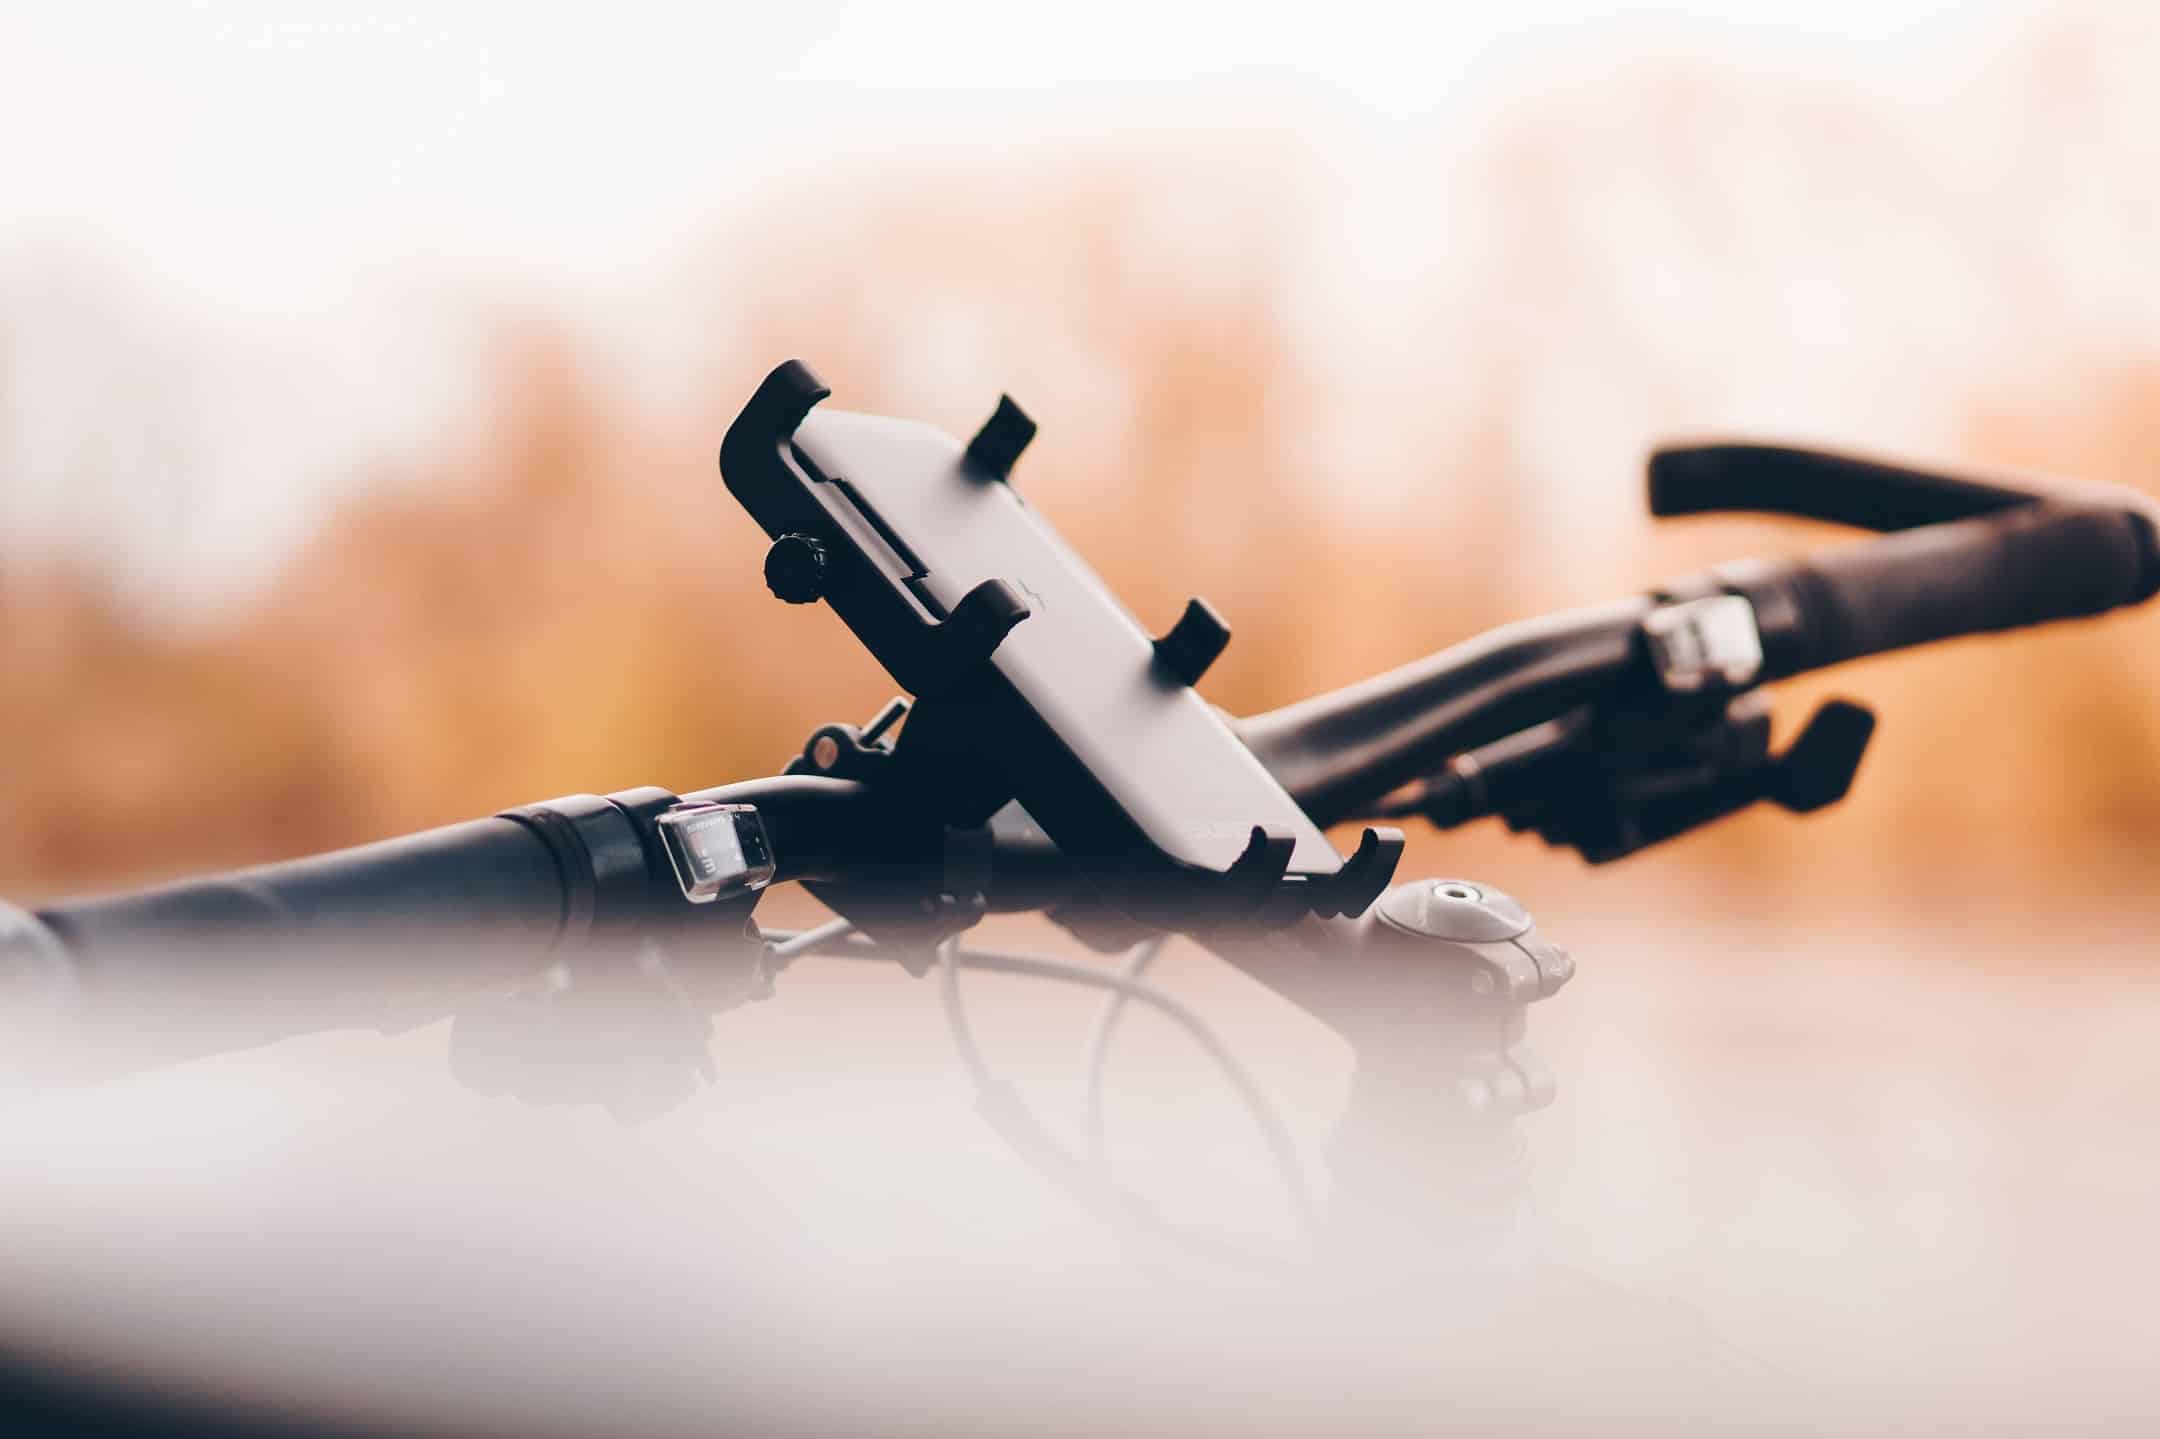 blurred photo showing cyclotron bike phone holder mounted on handlebars